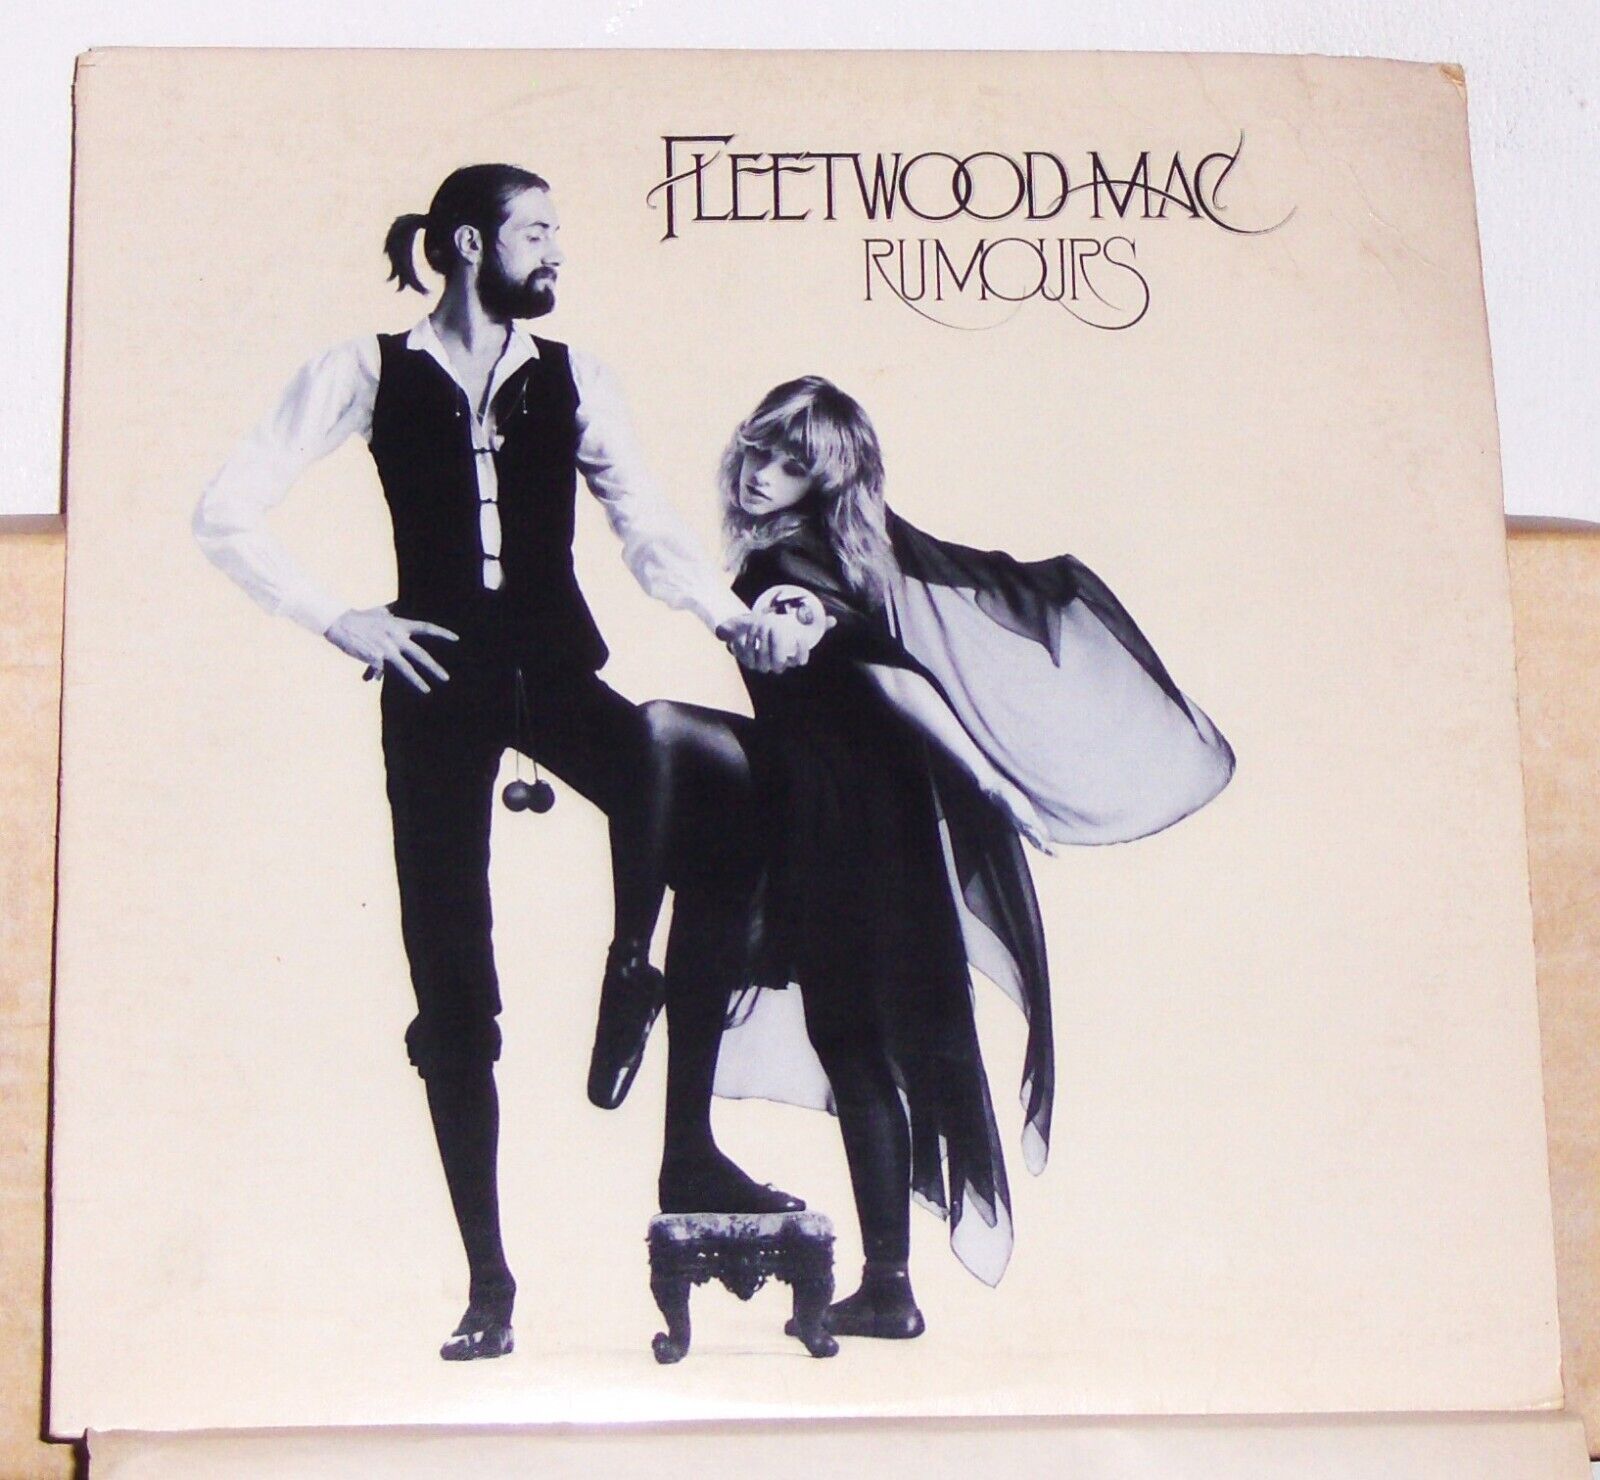 Fleetwood Mac – Rumours - 1977 Vinyl LP Record Album - Textured Cover and Insert